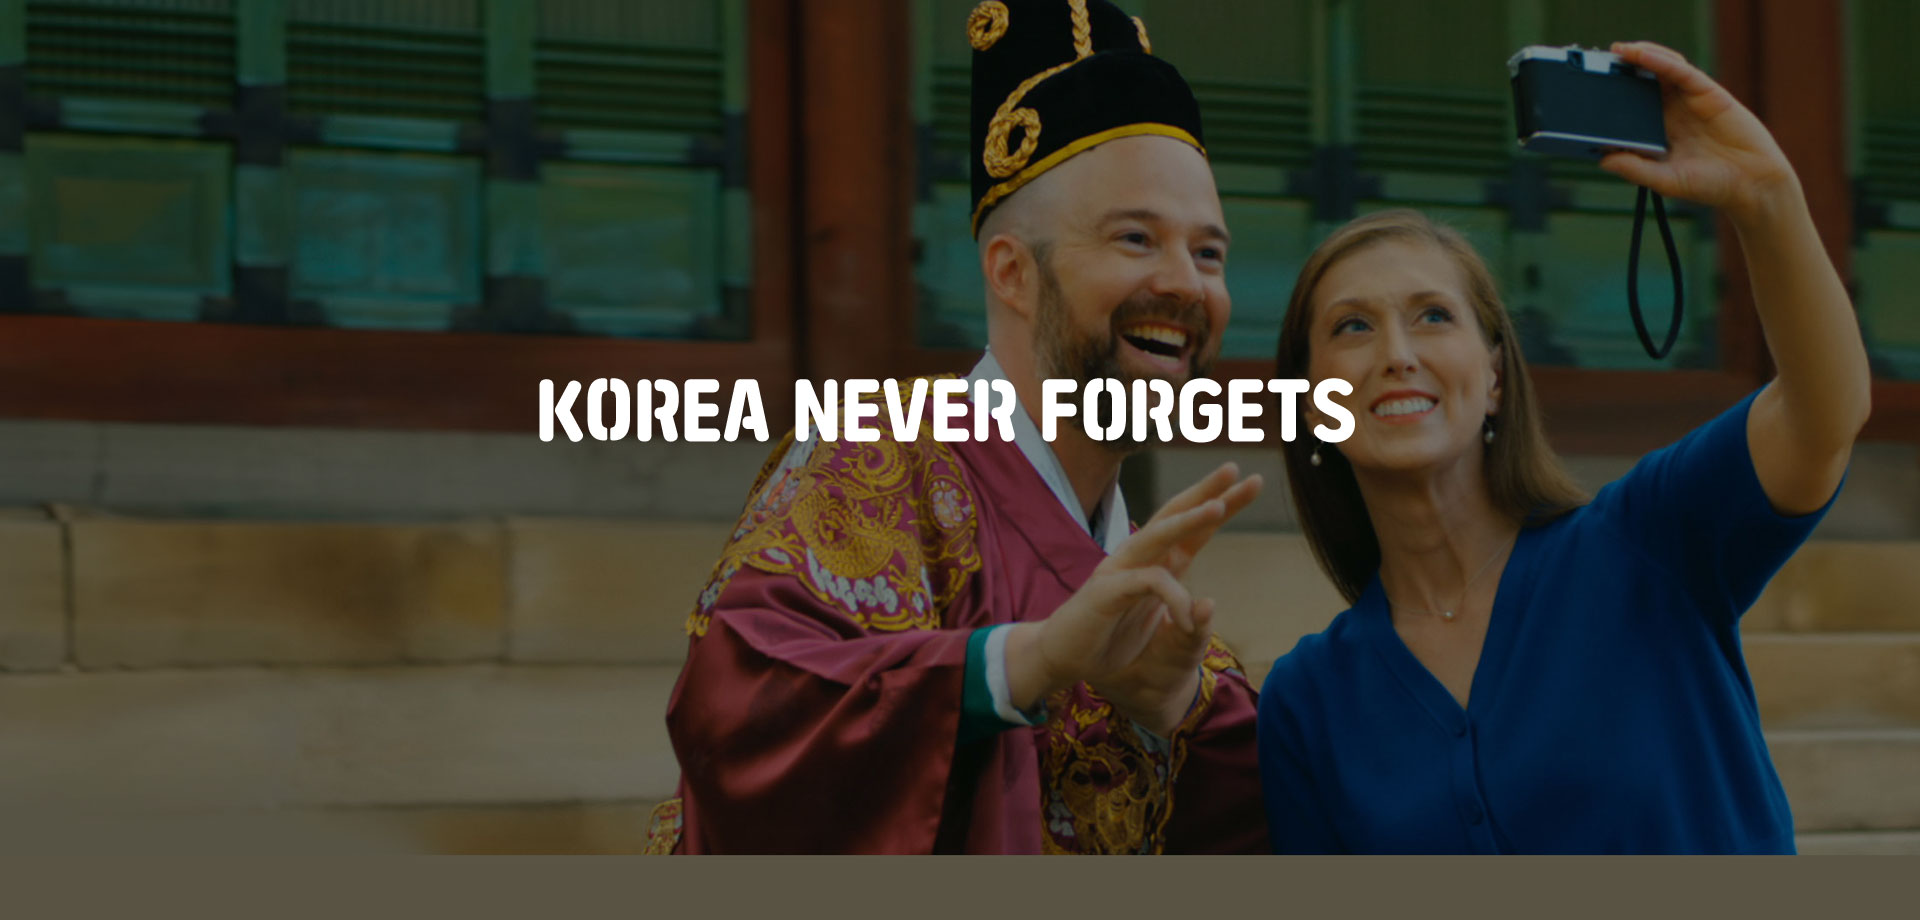 KOREA NEVER FORGETS